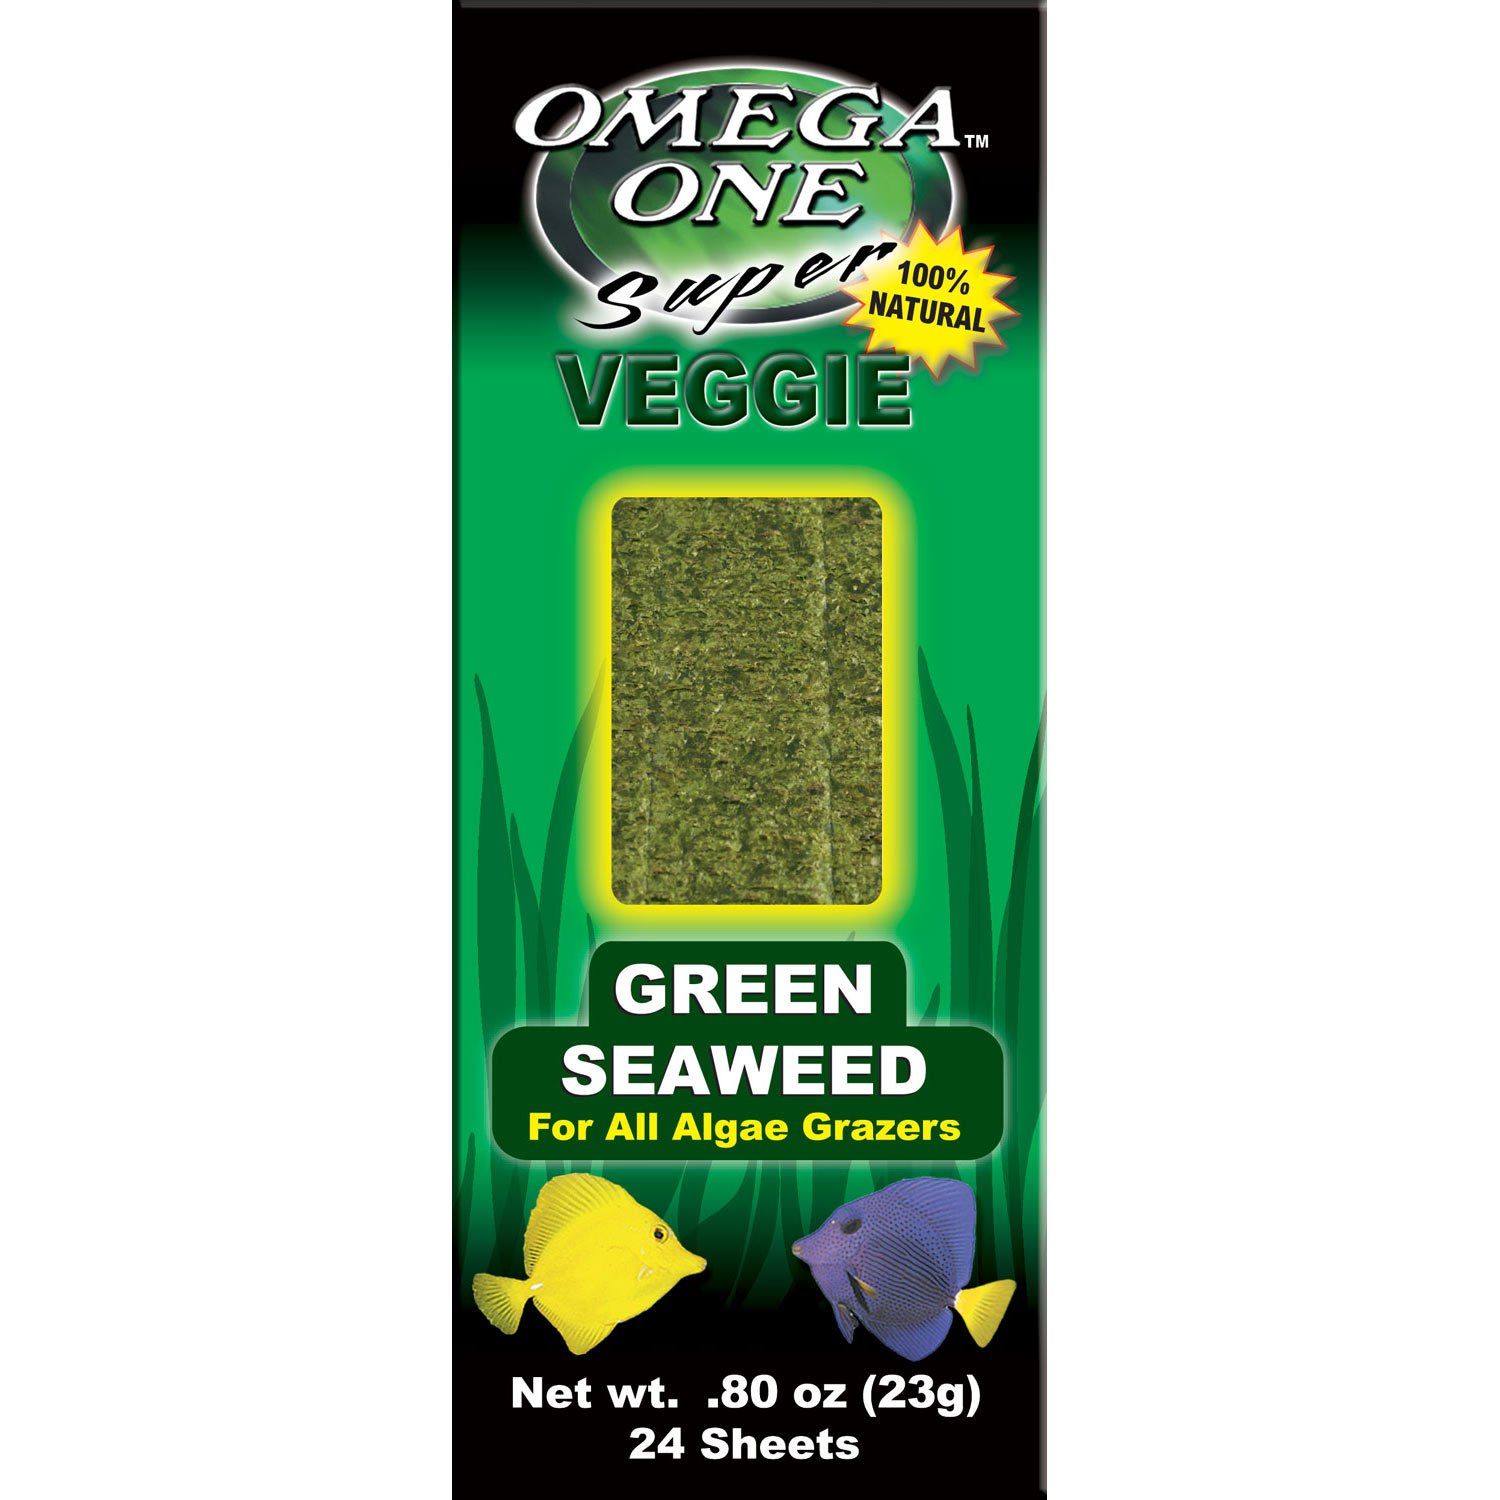 Omega One Seaweed Green 24 sheets